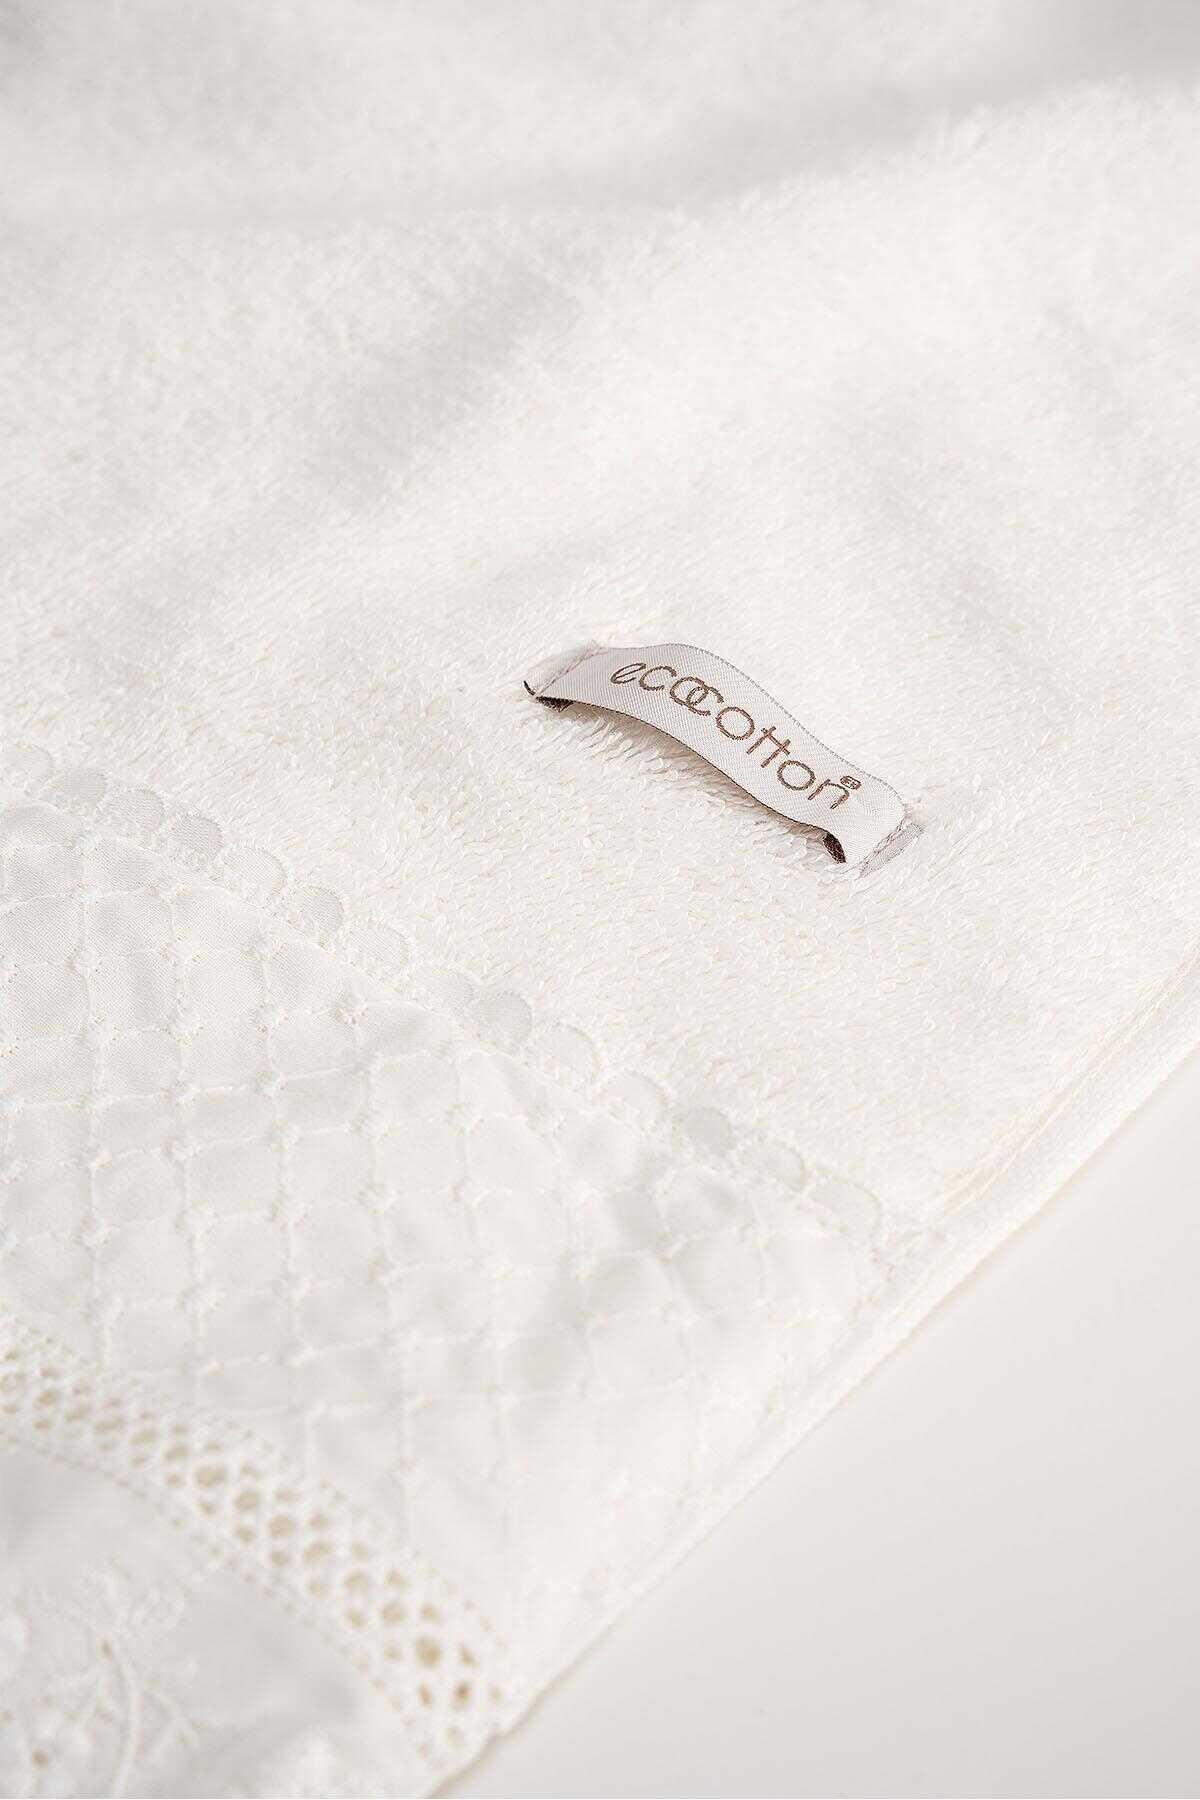 Ecocotton Liva Organic Cotton Woman's Face Towel 50x90 cm